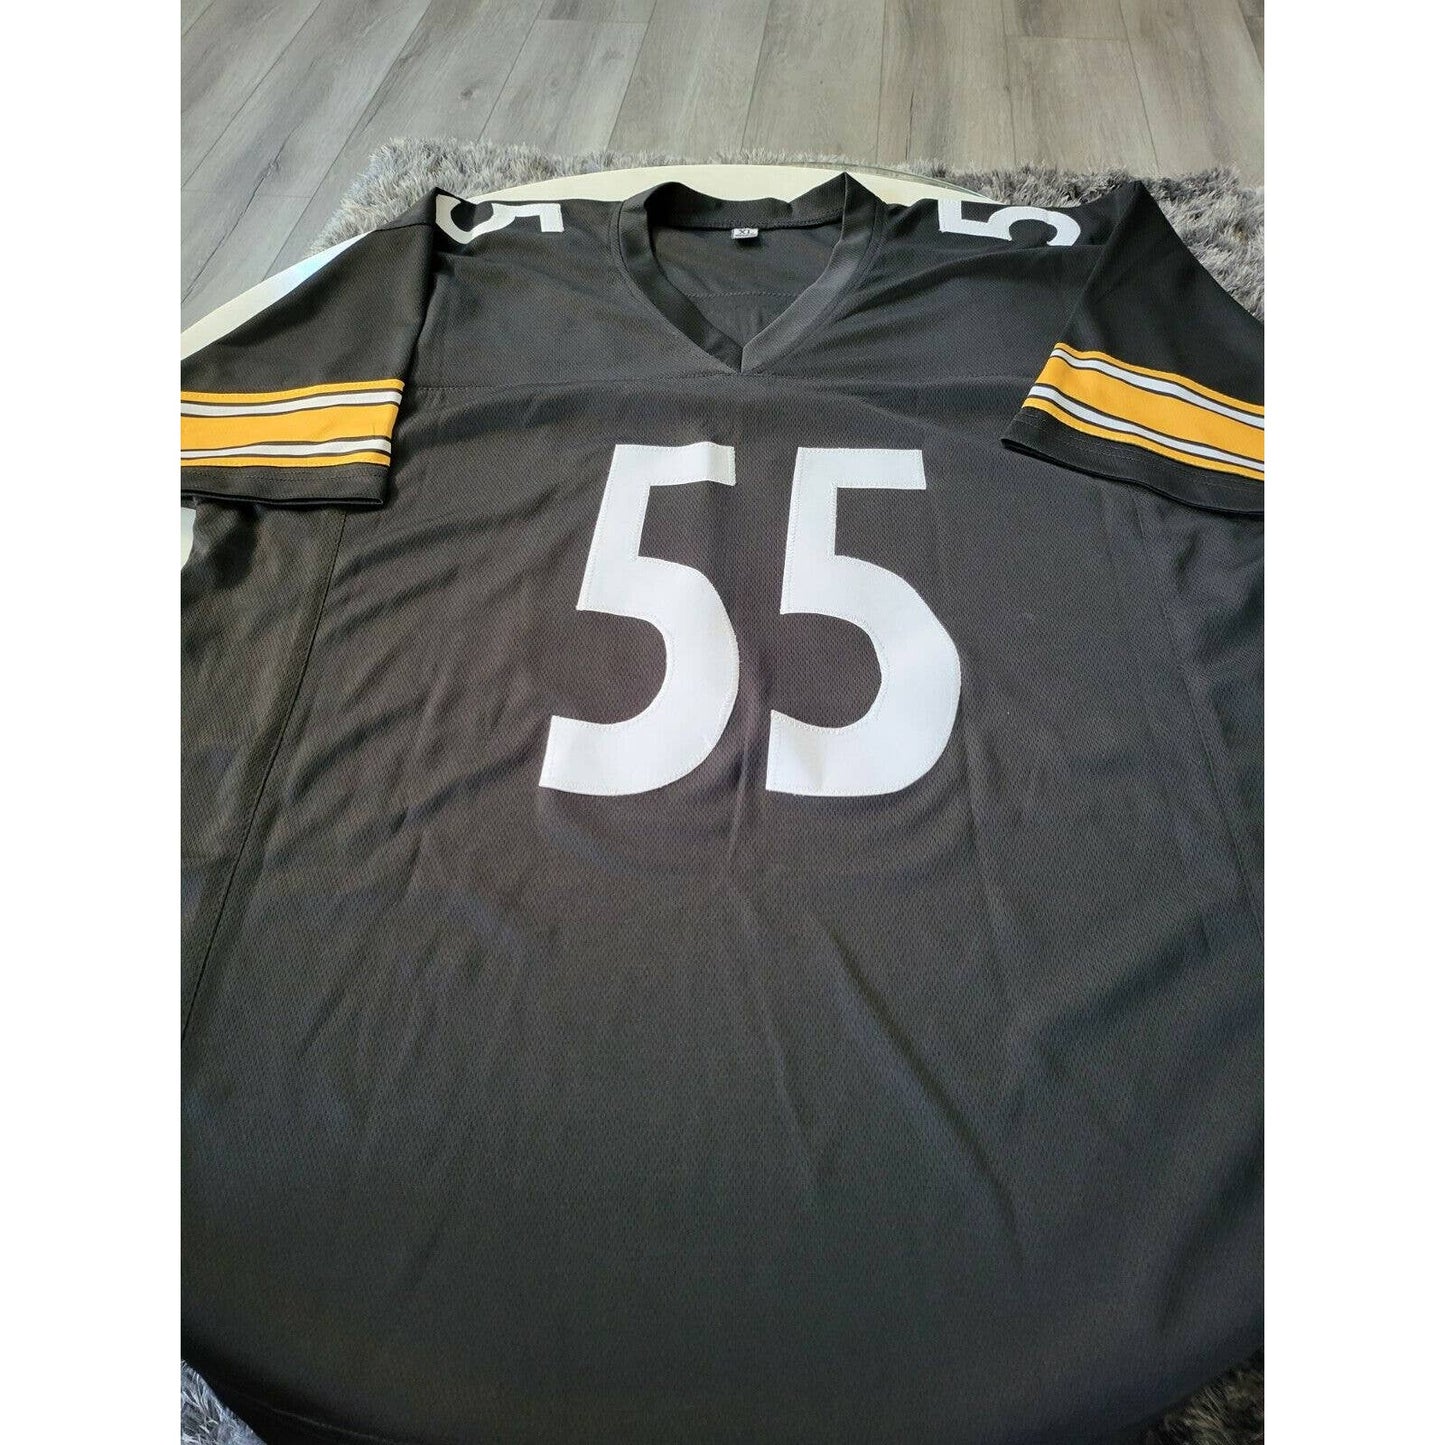 Devin Bush Autographed/Signed Jersey JSA COA Pittsburgh Steelers - TreasuresEvolved